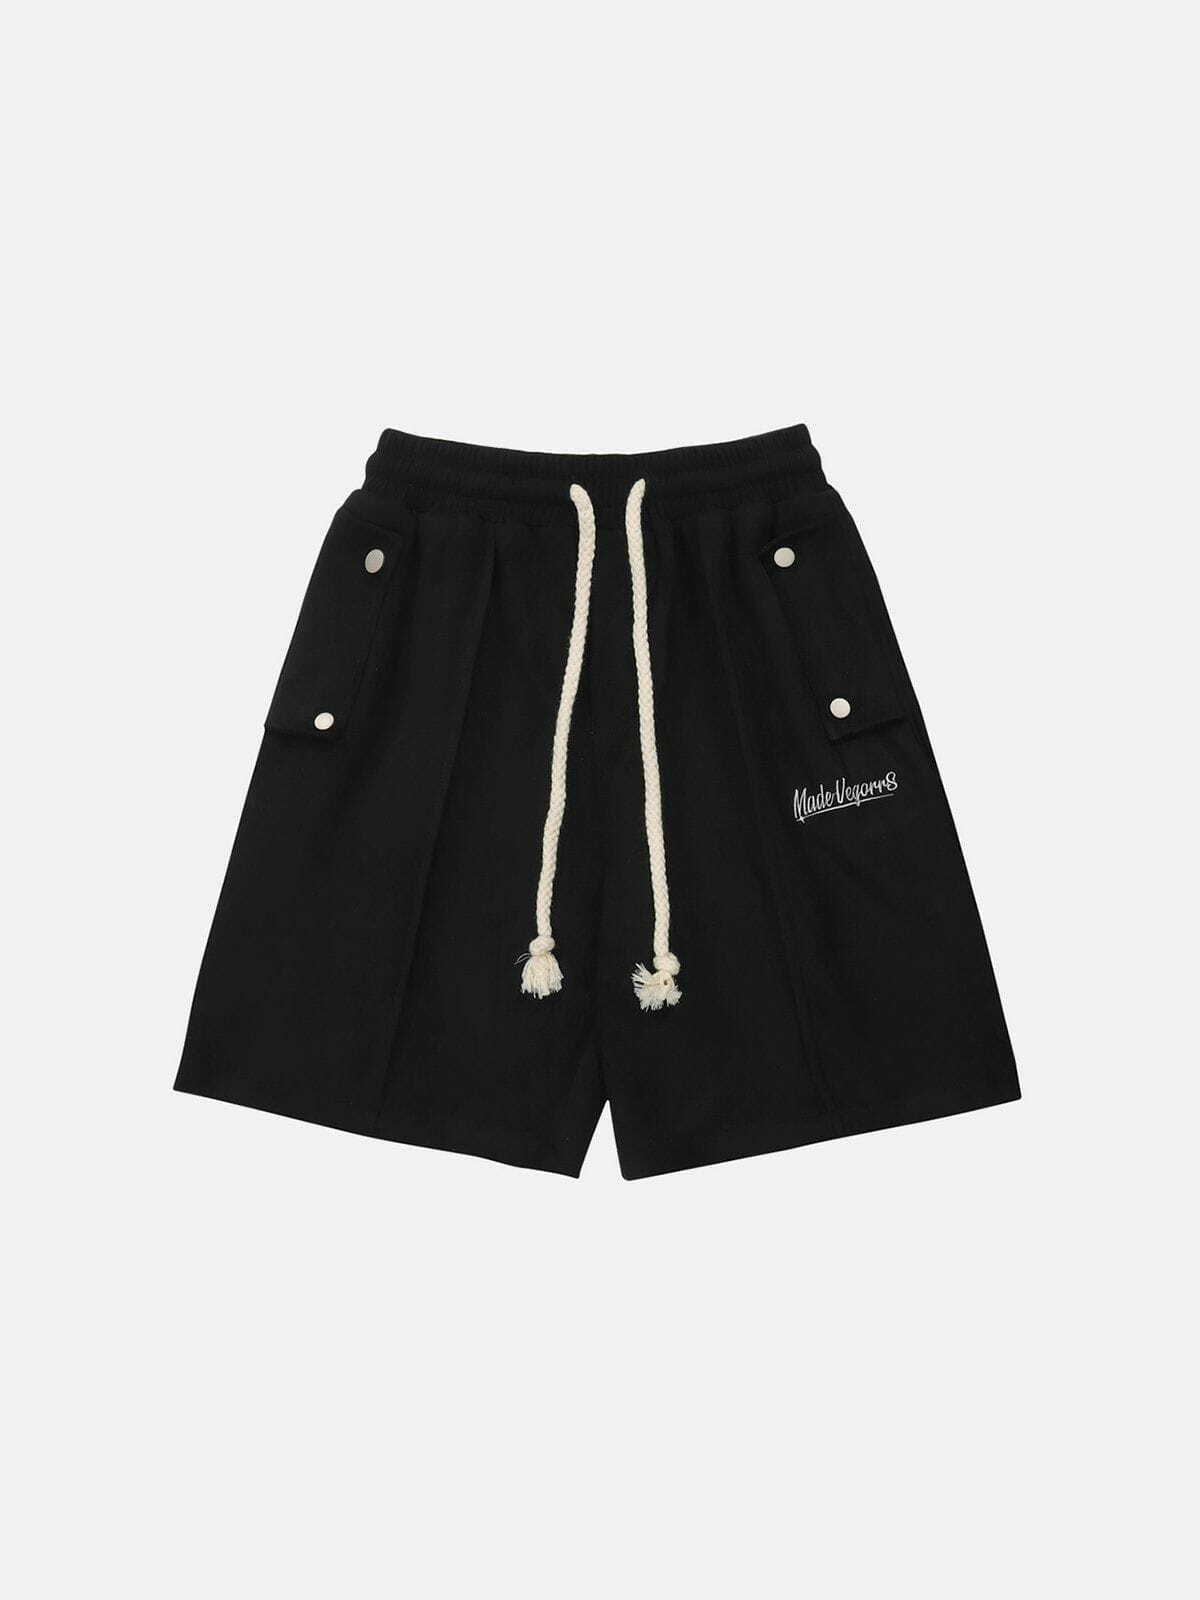 youthful button pocket shorts   sleek design & urban appeal 4721